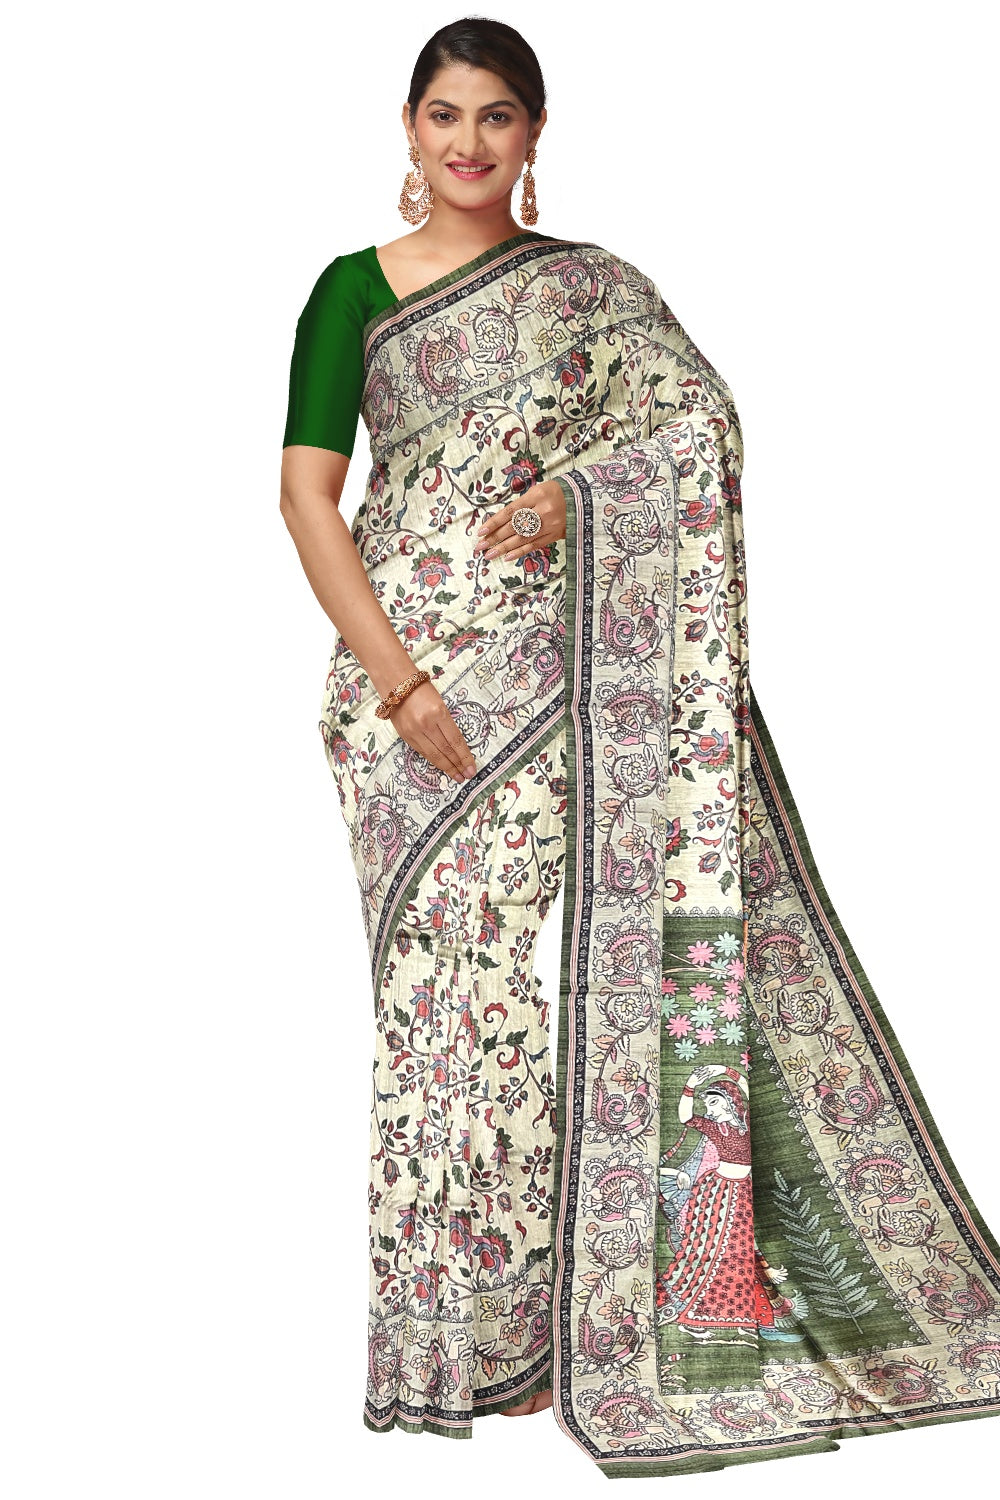 Southloom Tussar Silk Kalamkari Design Vishu Themed Krishna Radha Saree